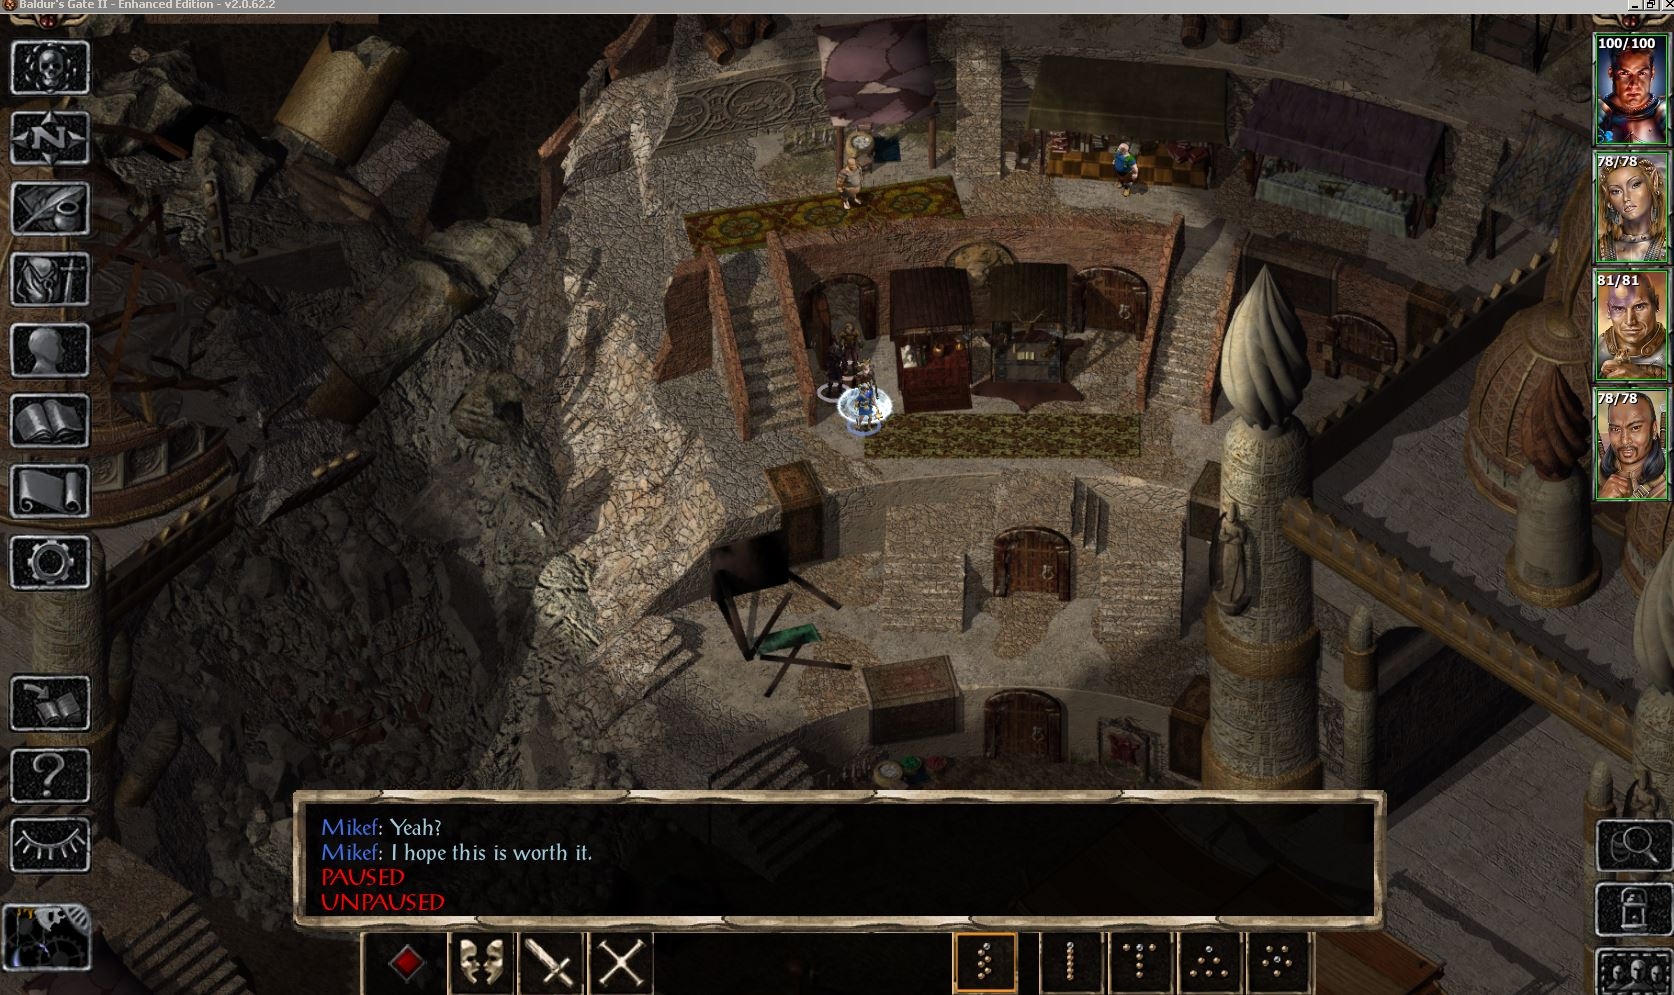 Baldurs gate items. Baldur's Gate 3. Карта балдурс гейт 1. Baldur's Gate 1 enhanced Edition. Baldur's Gate 1 карта.